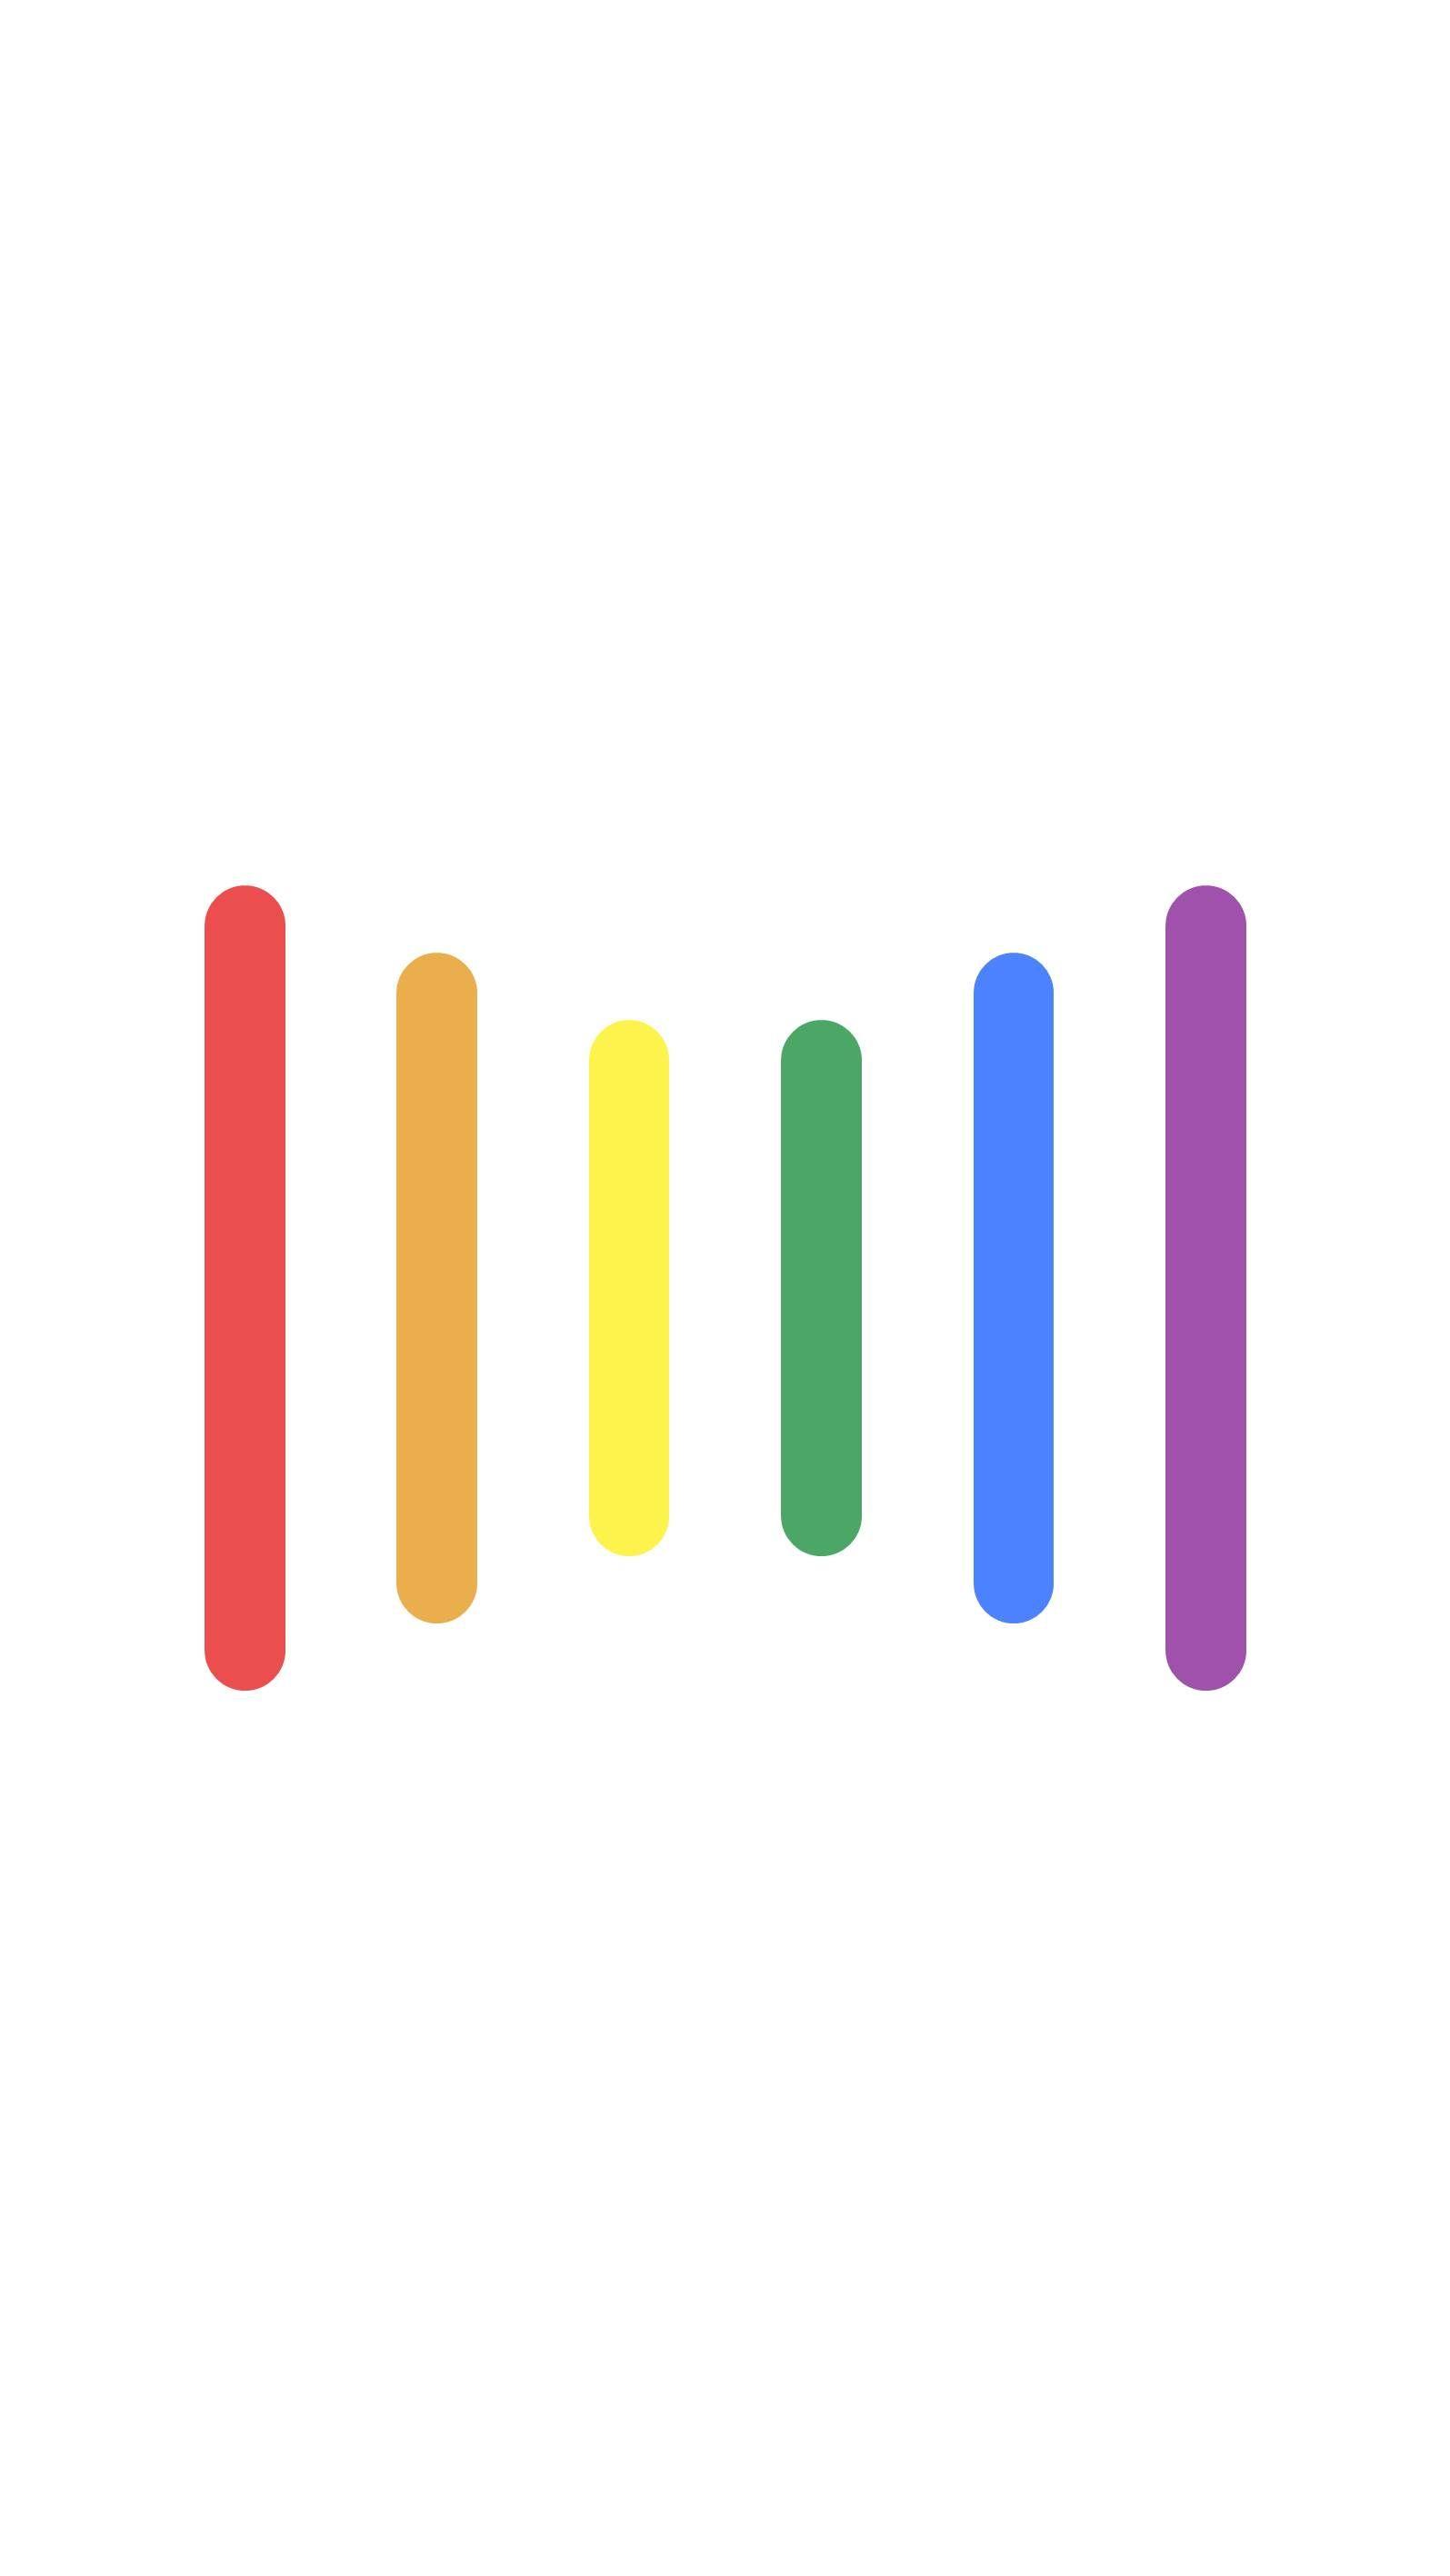 iPhone wallpaper rainbow pride Gay lesbian. LGBT